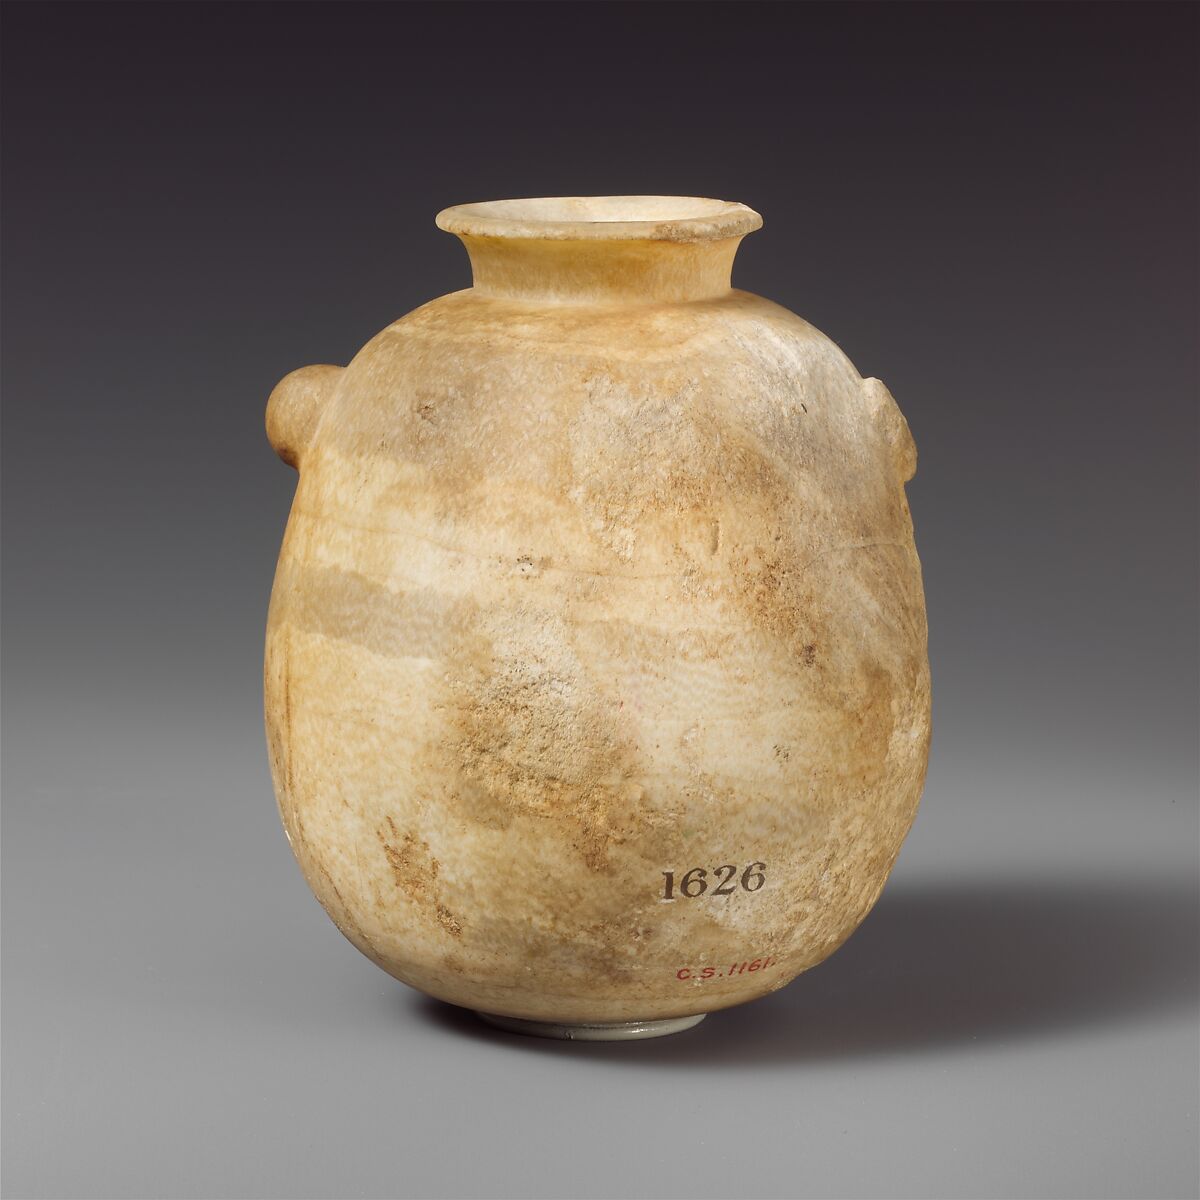 Alabaster alabastron (perfume vase), Calcite (alabaster), Cypriot 